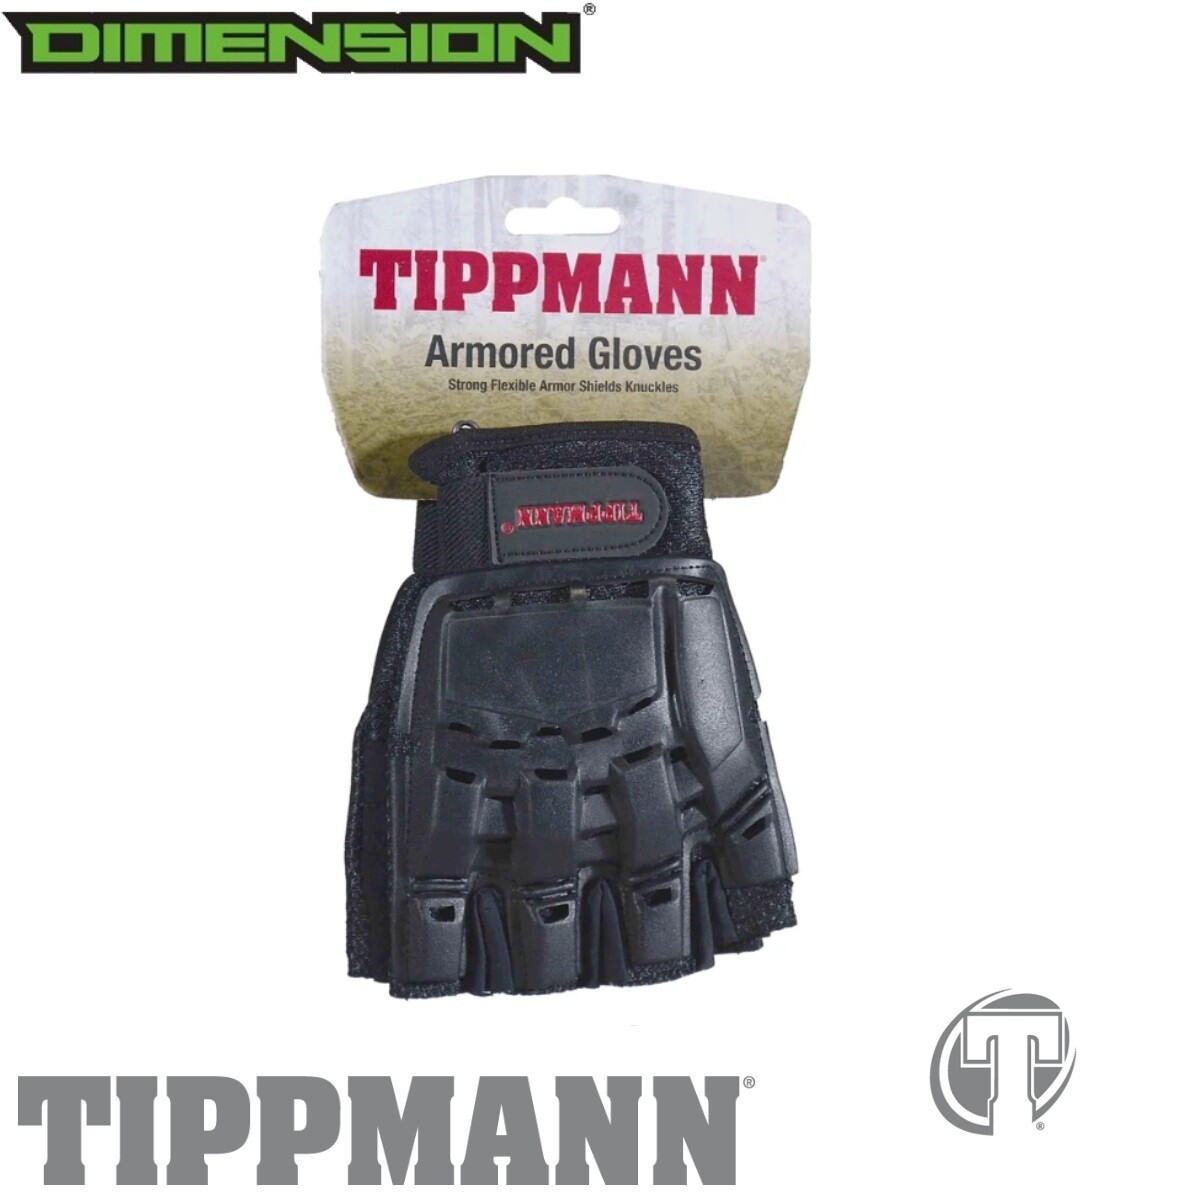 Tippmann Armored Gloves - Medium